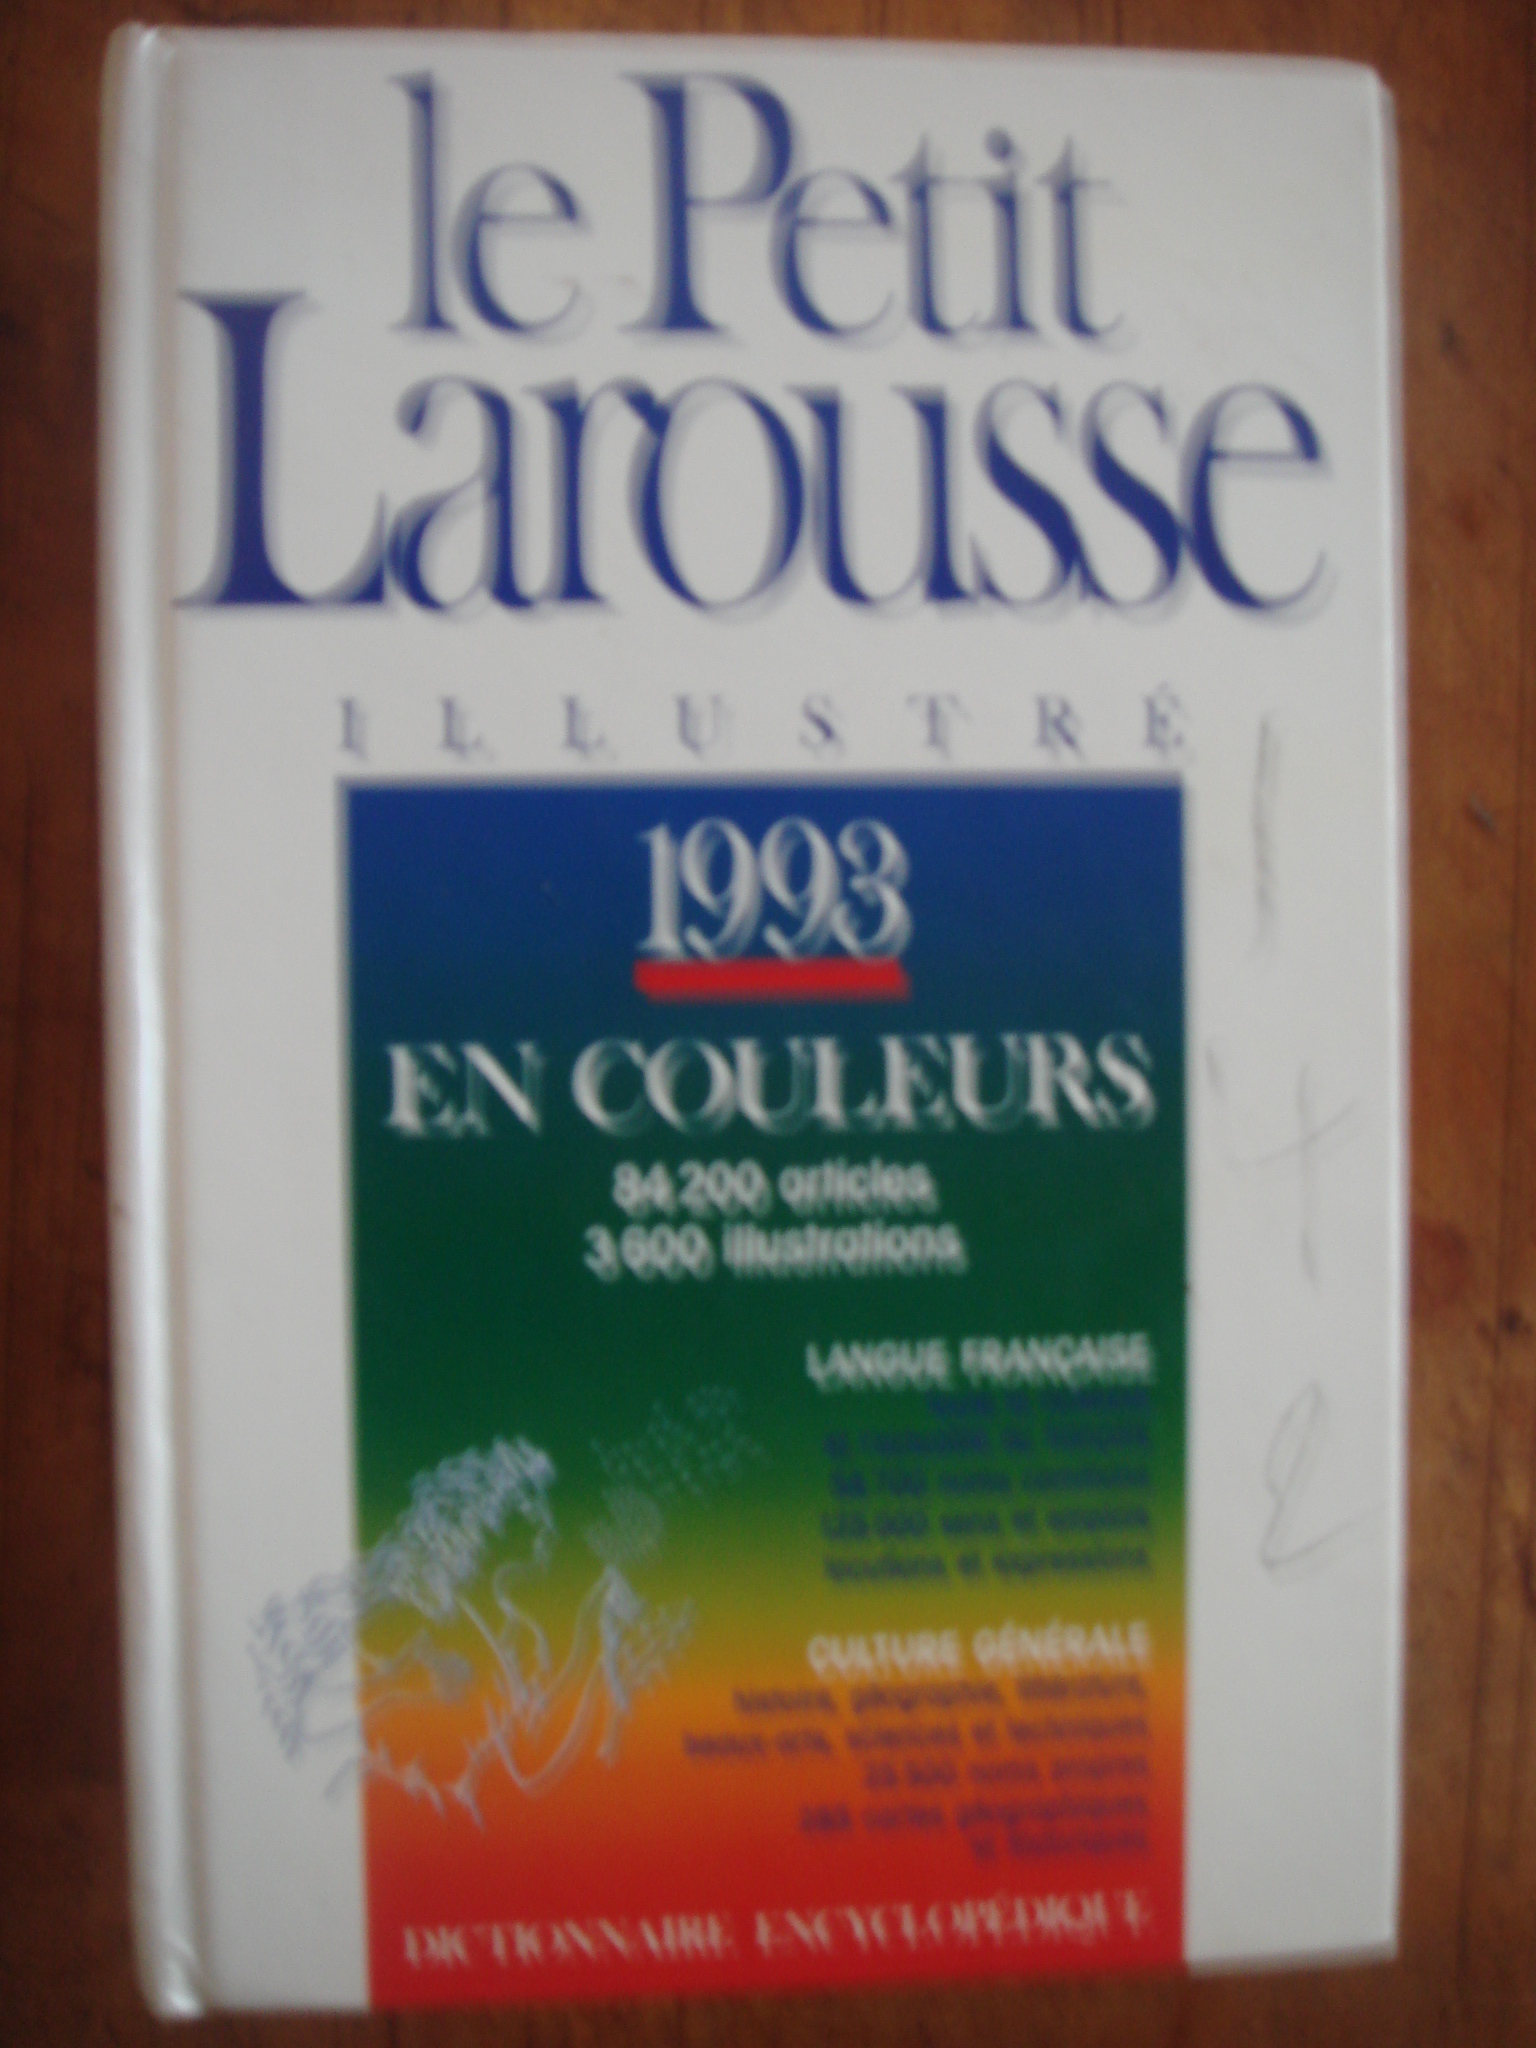 zobrazit detail knihy Le Petit Larousse Illustre, 1993